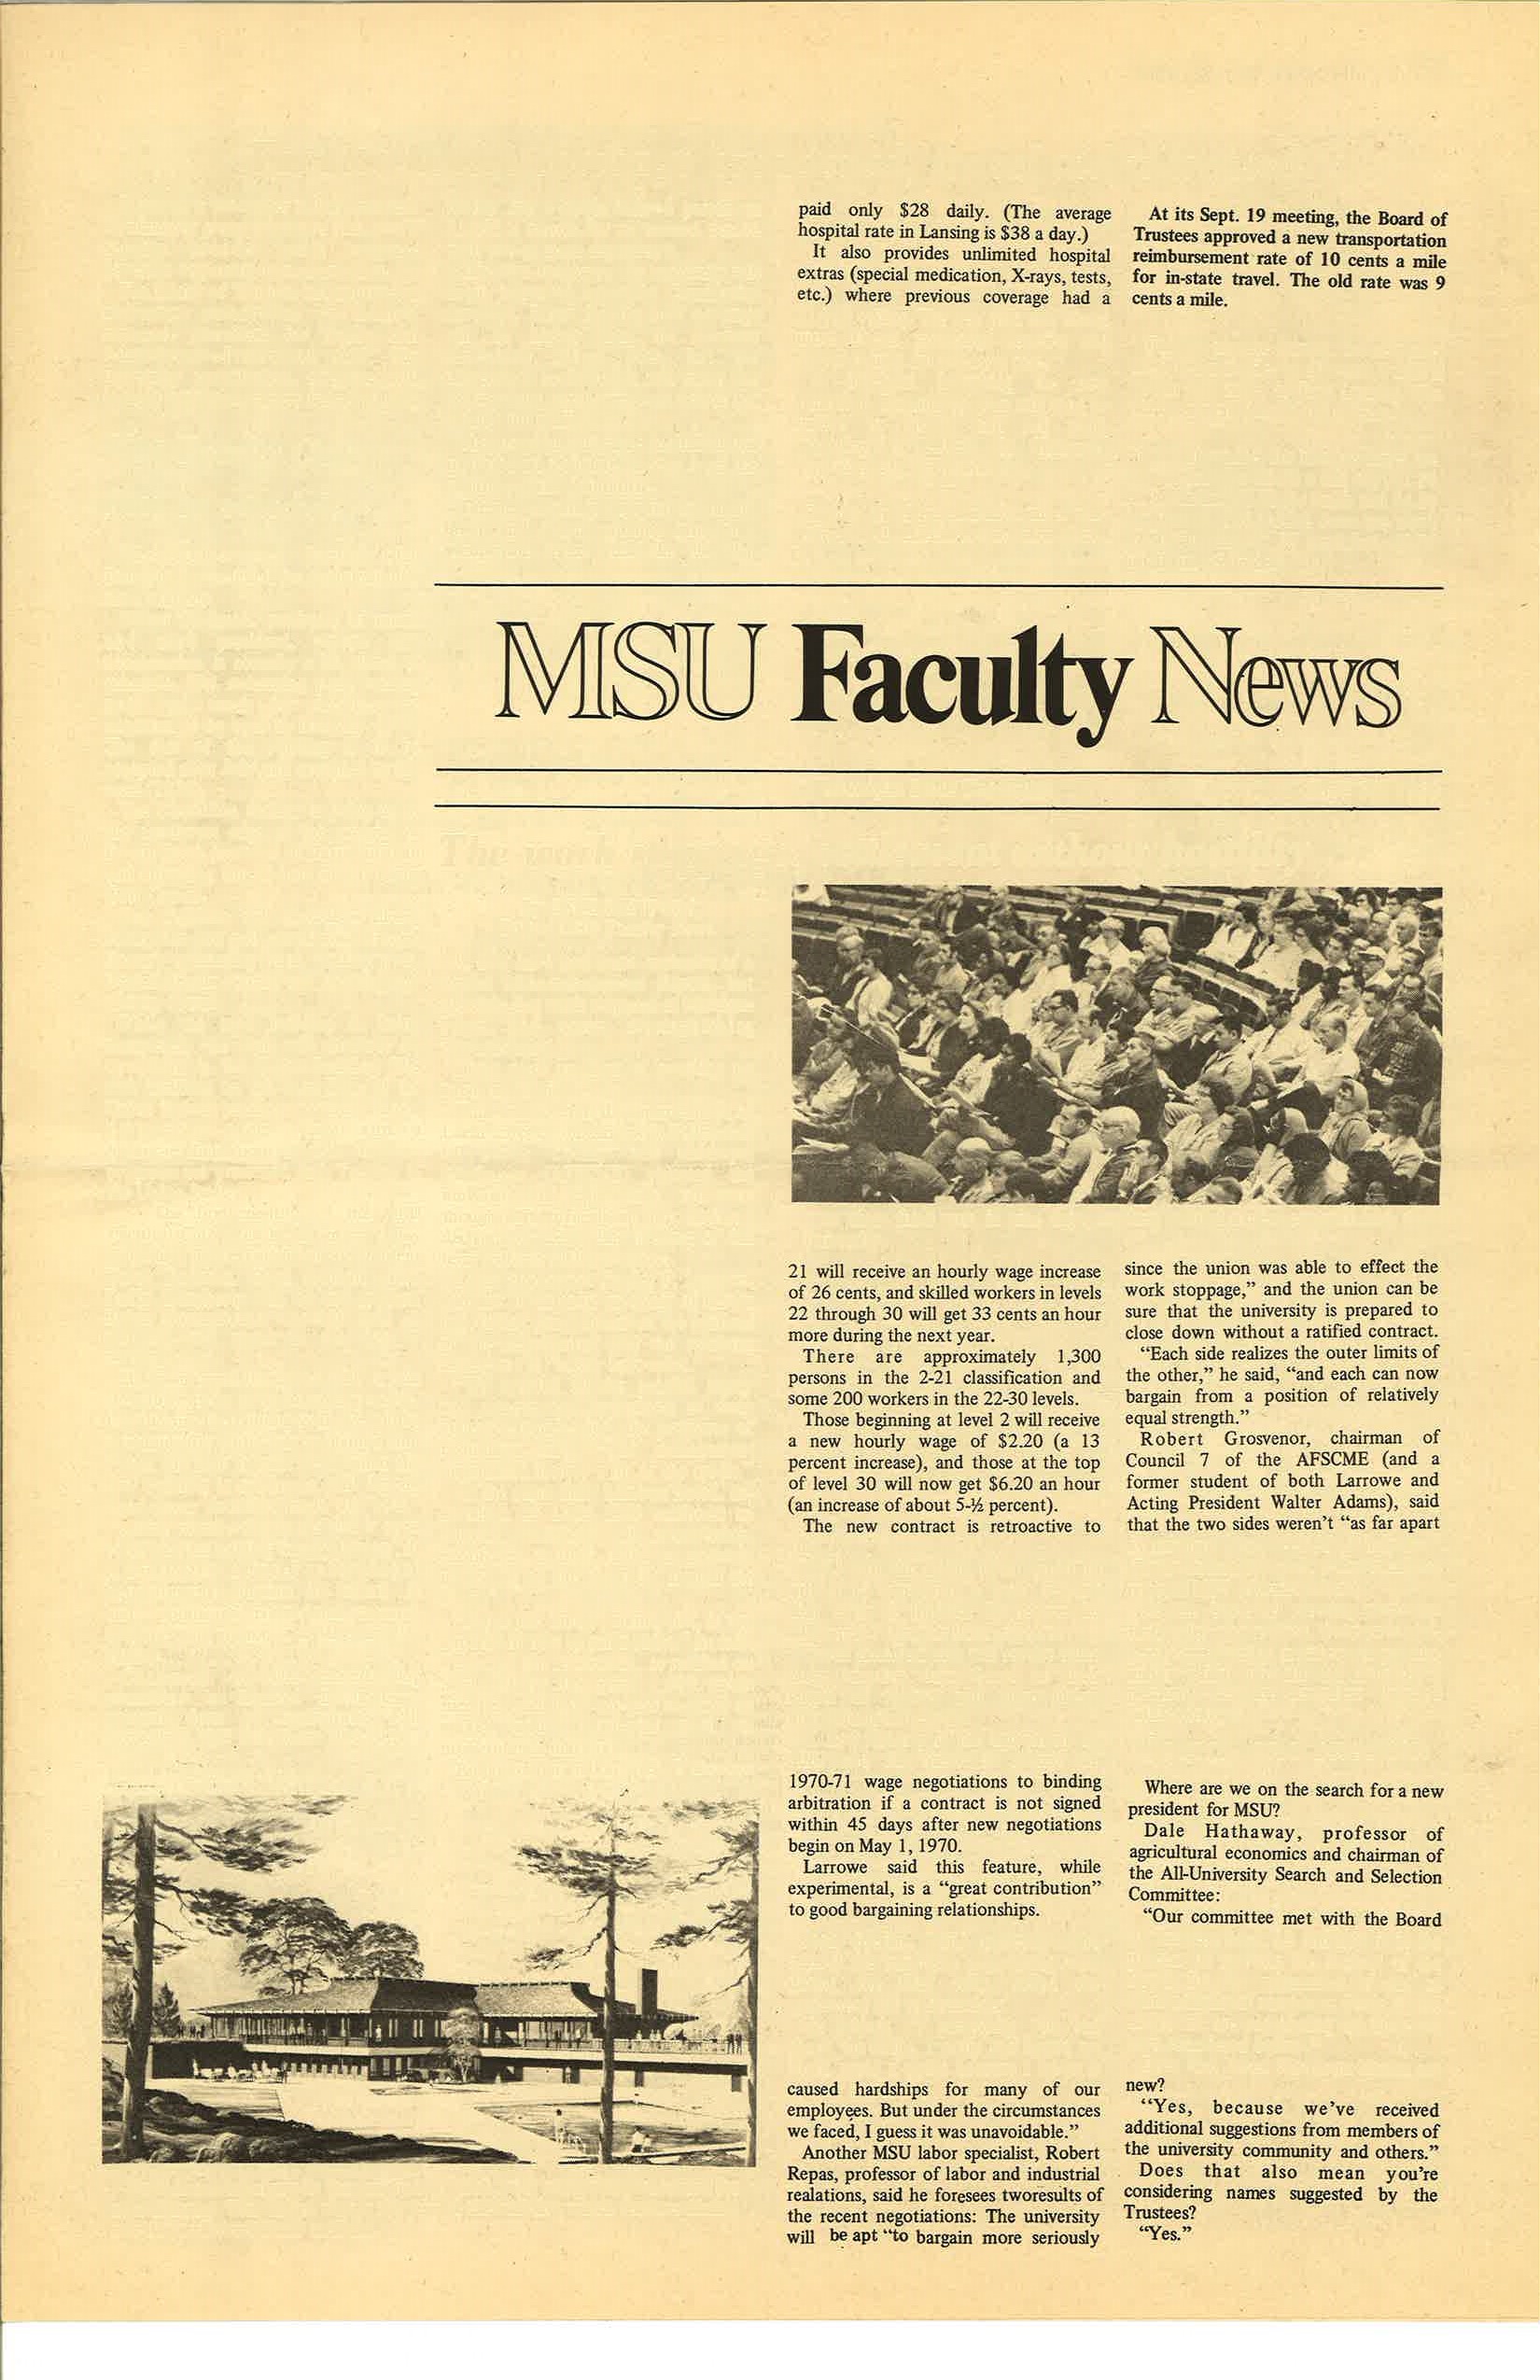 MSU News Bulletin, Vol. 1 No. 4, October 21, 1969